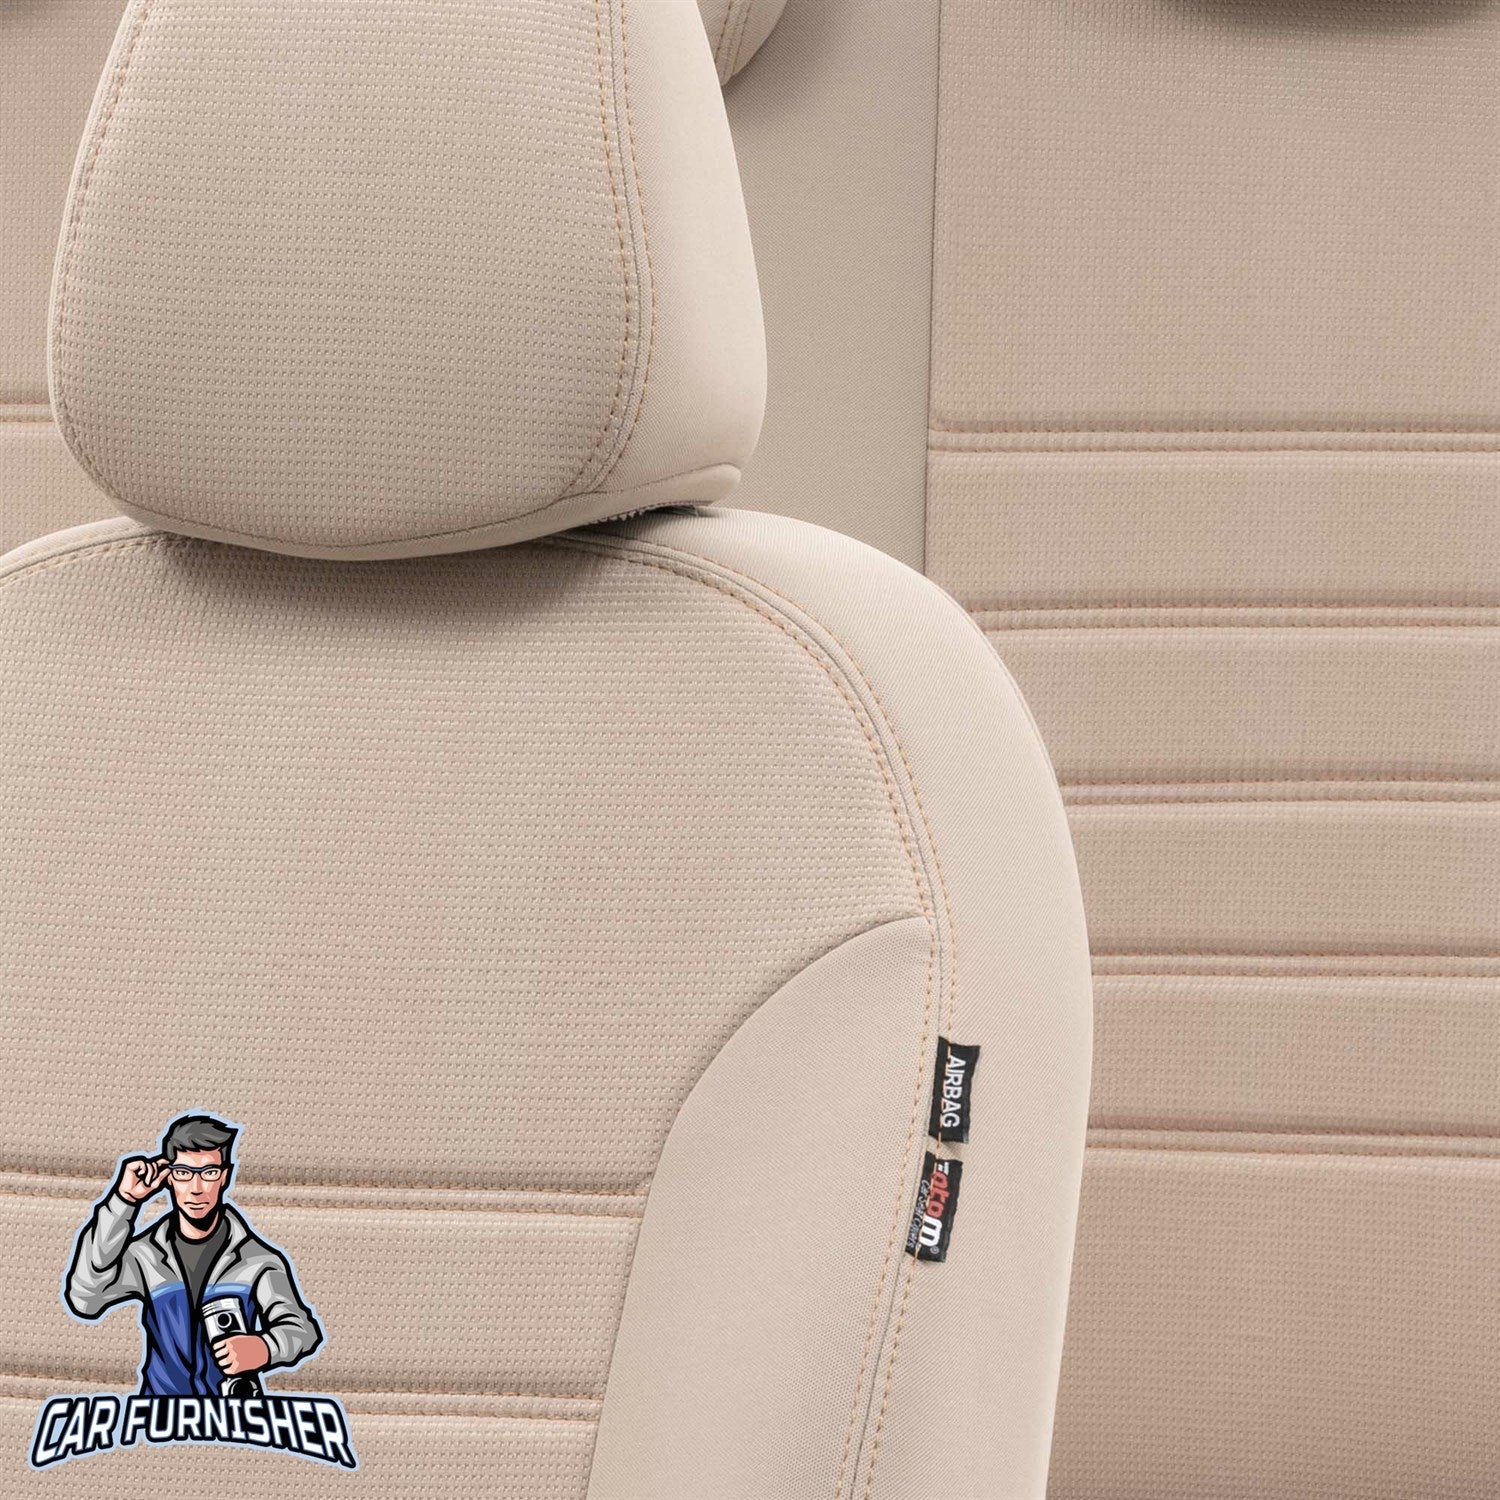 Mini Countryman Seat Covers Original Jacquard Design Beige Jacquard Fabric